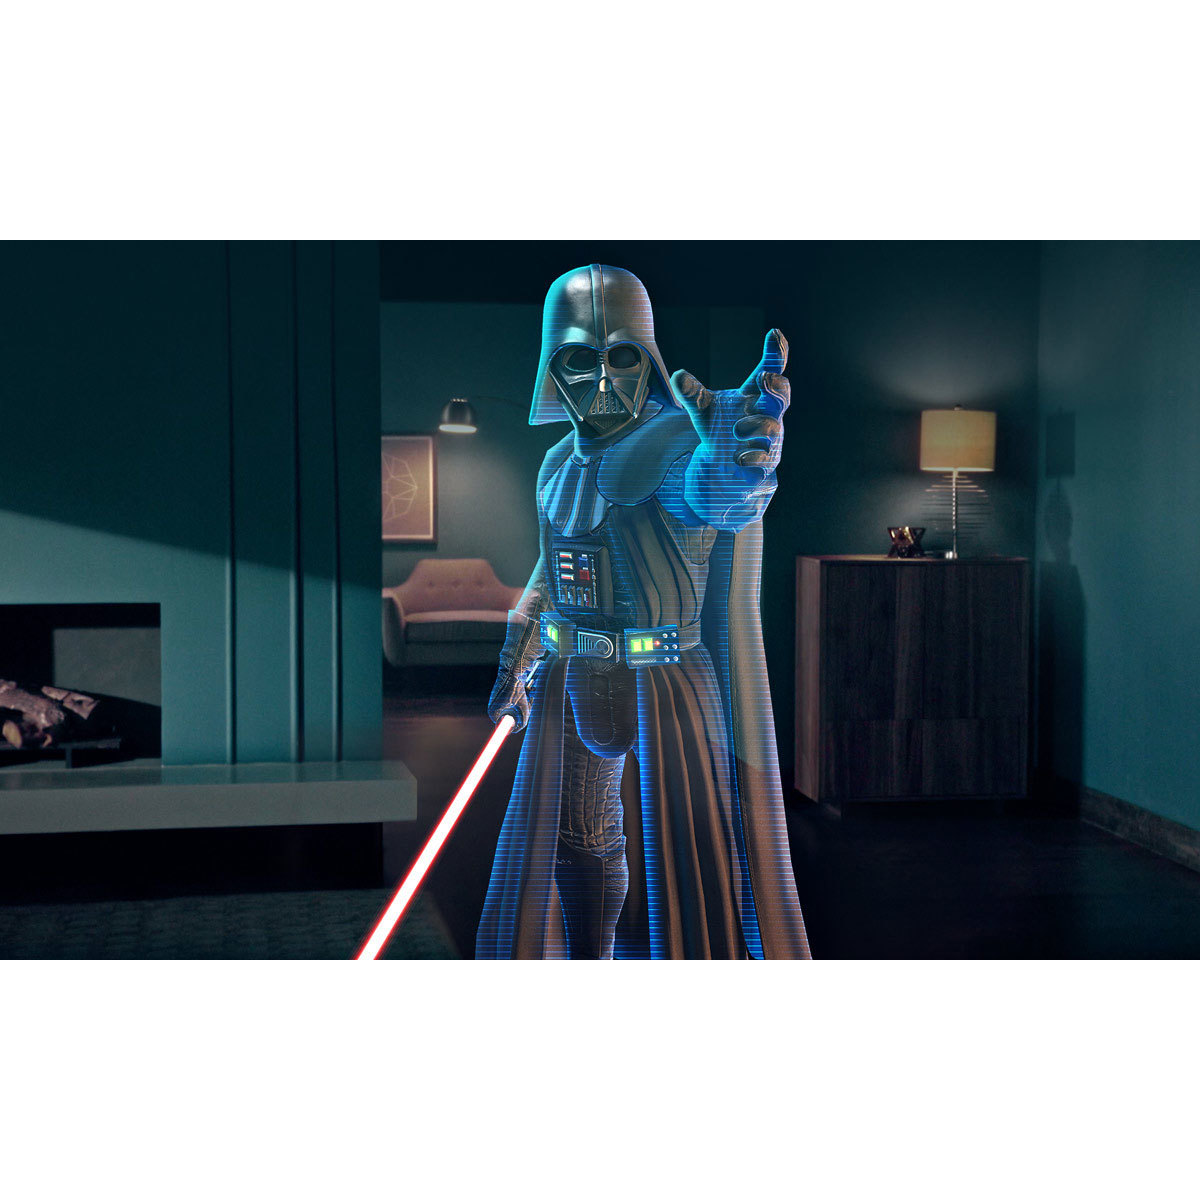 Lenovo Star Wars VR game image